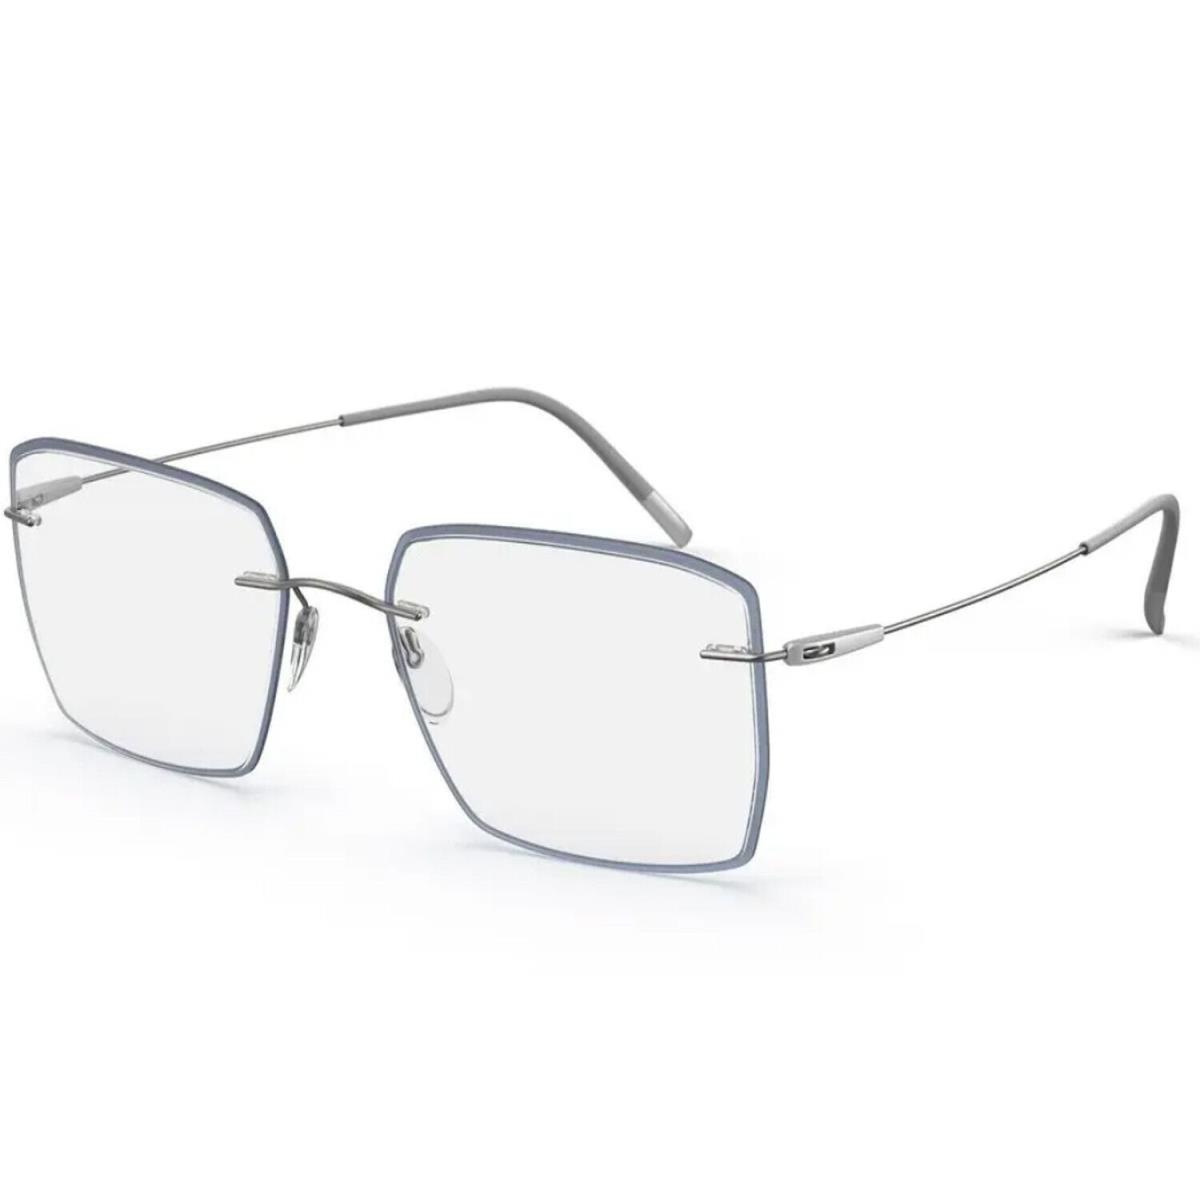 Silhouette Eyeglasses Dynamics Colorwave 54/19/150 Metallic Taupe 5500/GV-7110